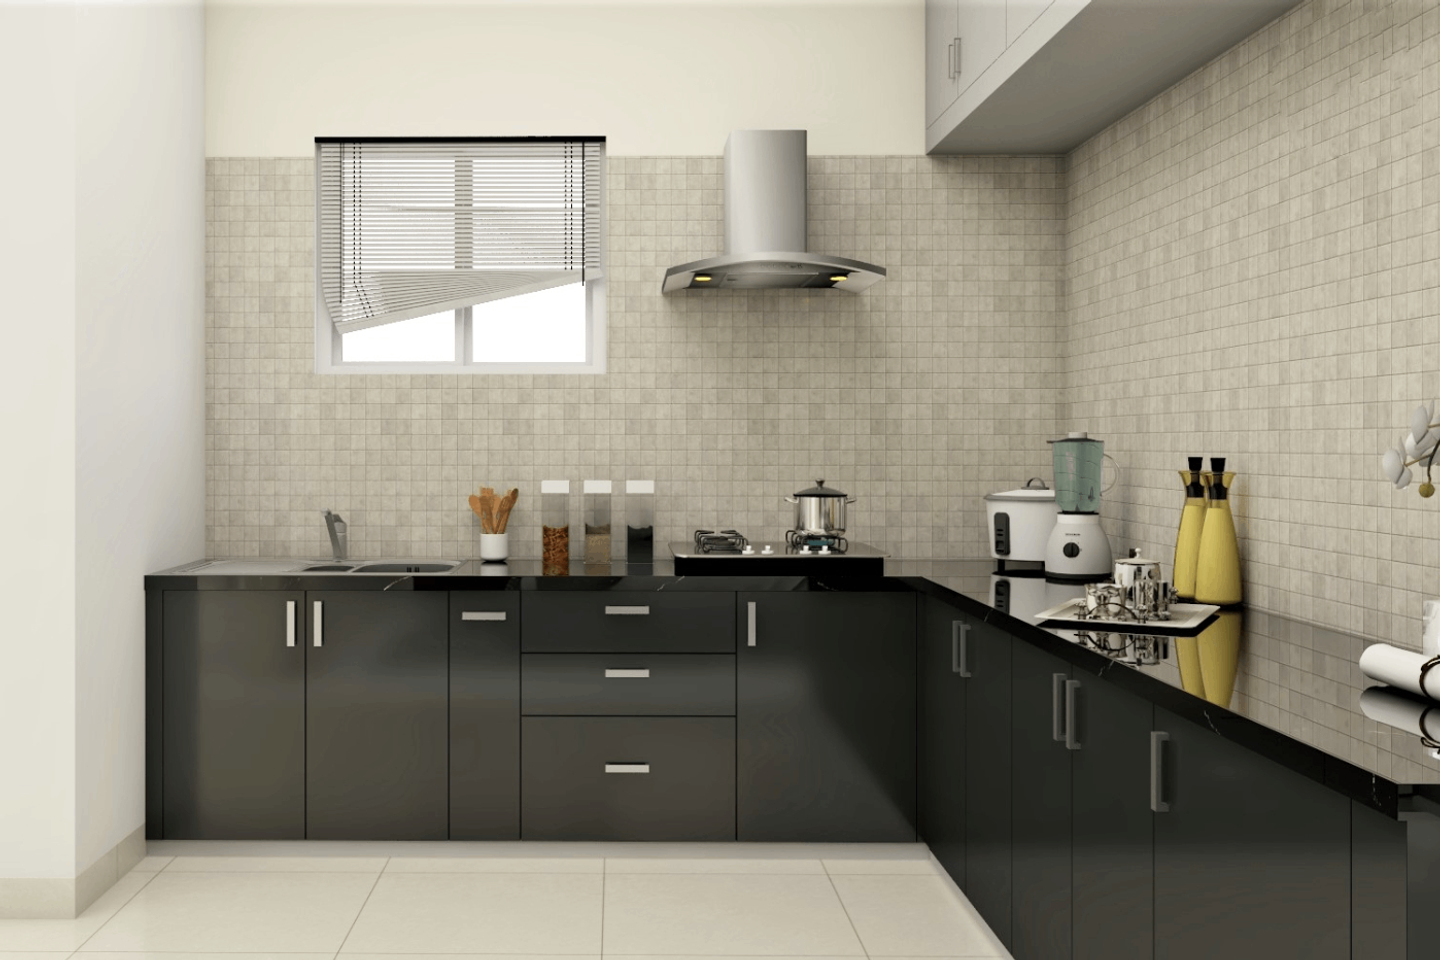 Modern Kitchen With Work Triangle - Livspace